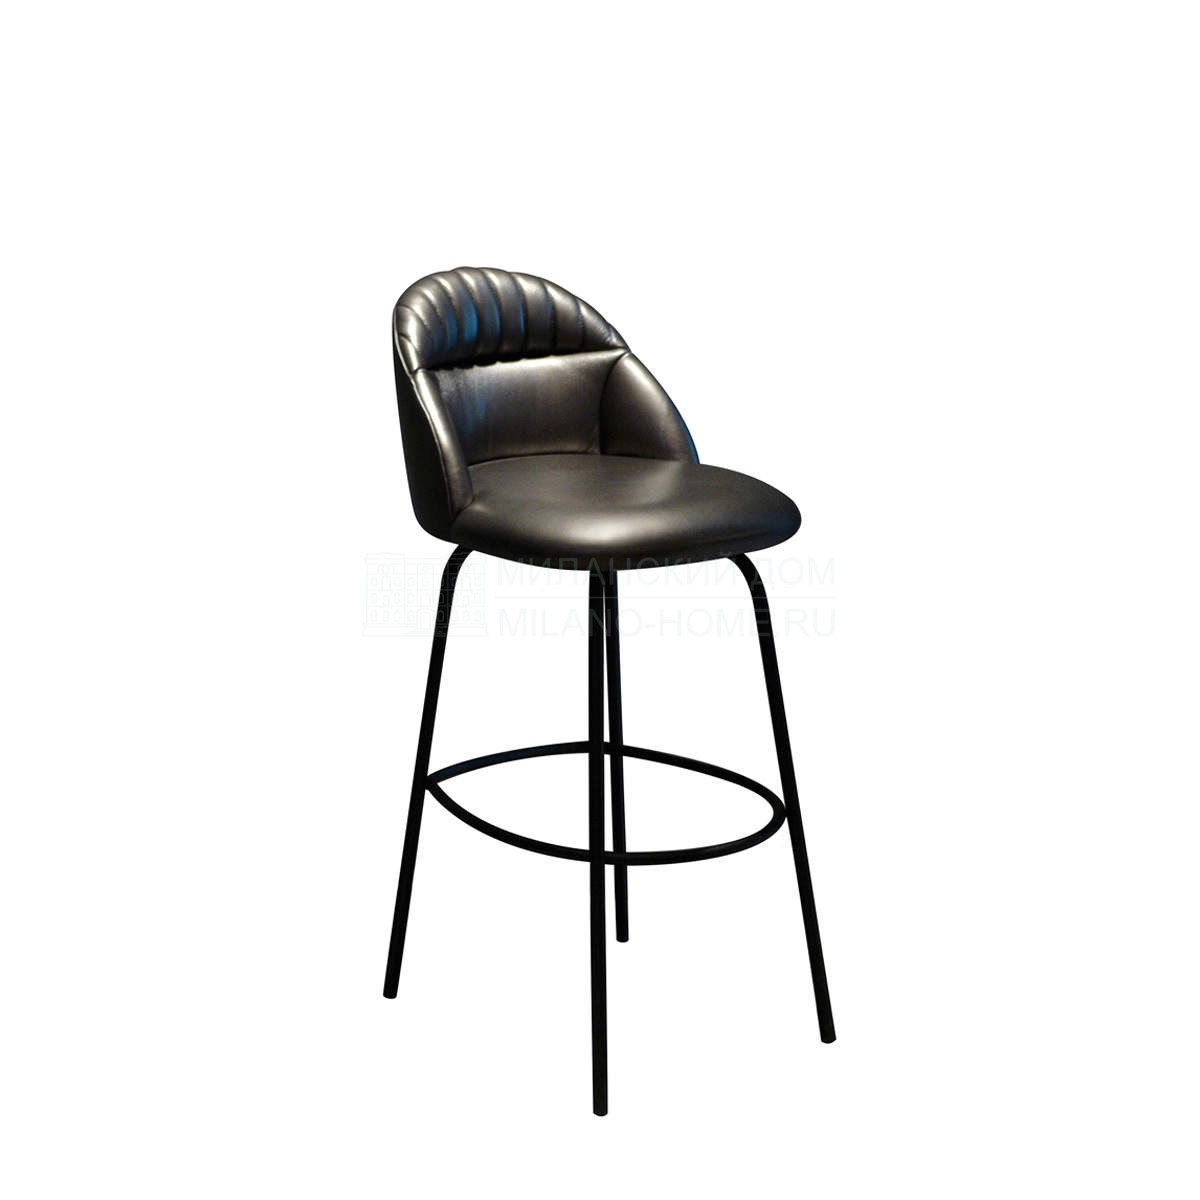 Барный стул Cricket bar stool из Испании фабрики COLECCION ALEXANDRA